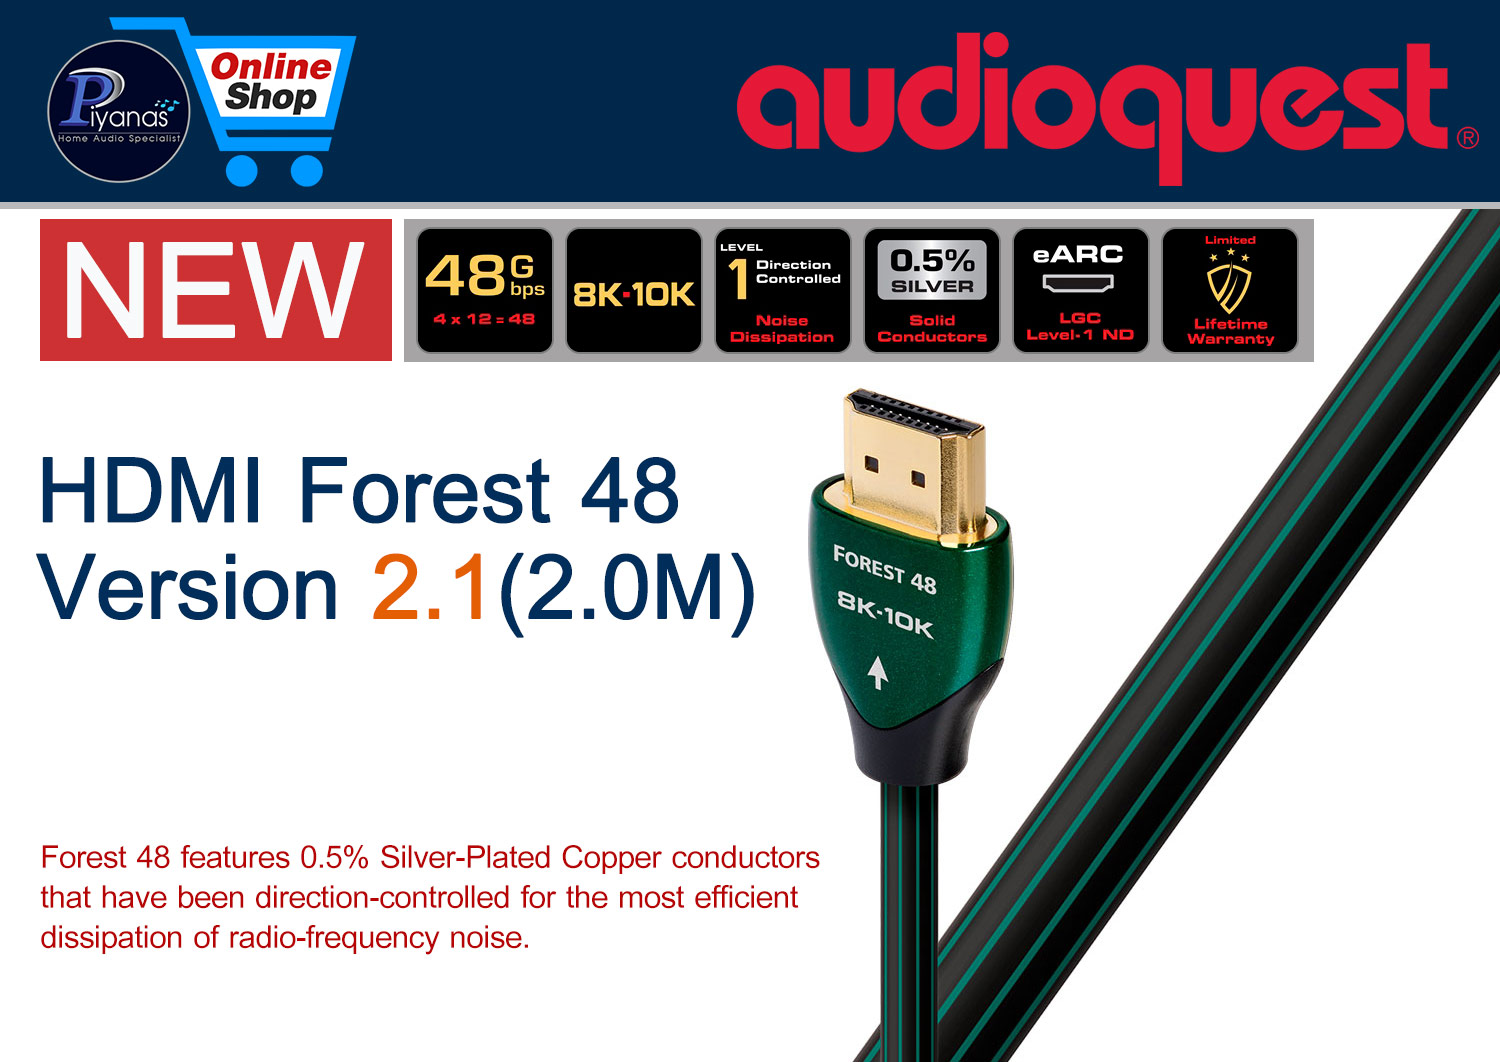 HDMI-Forest 48 Version 2.1 (2.0M)